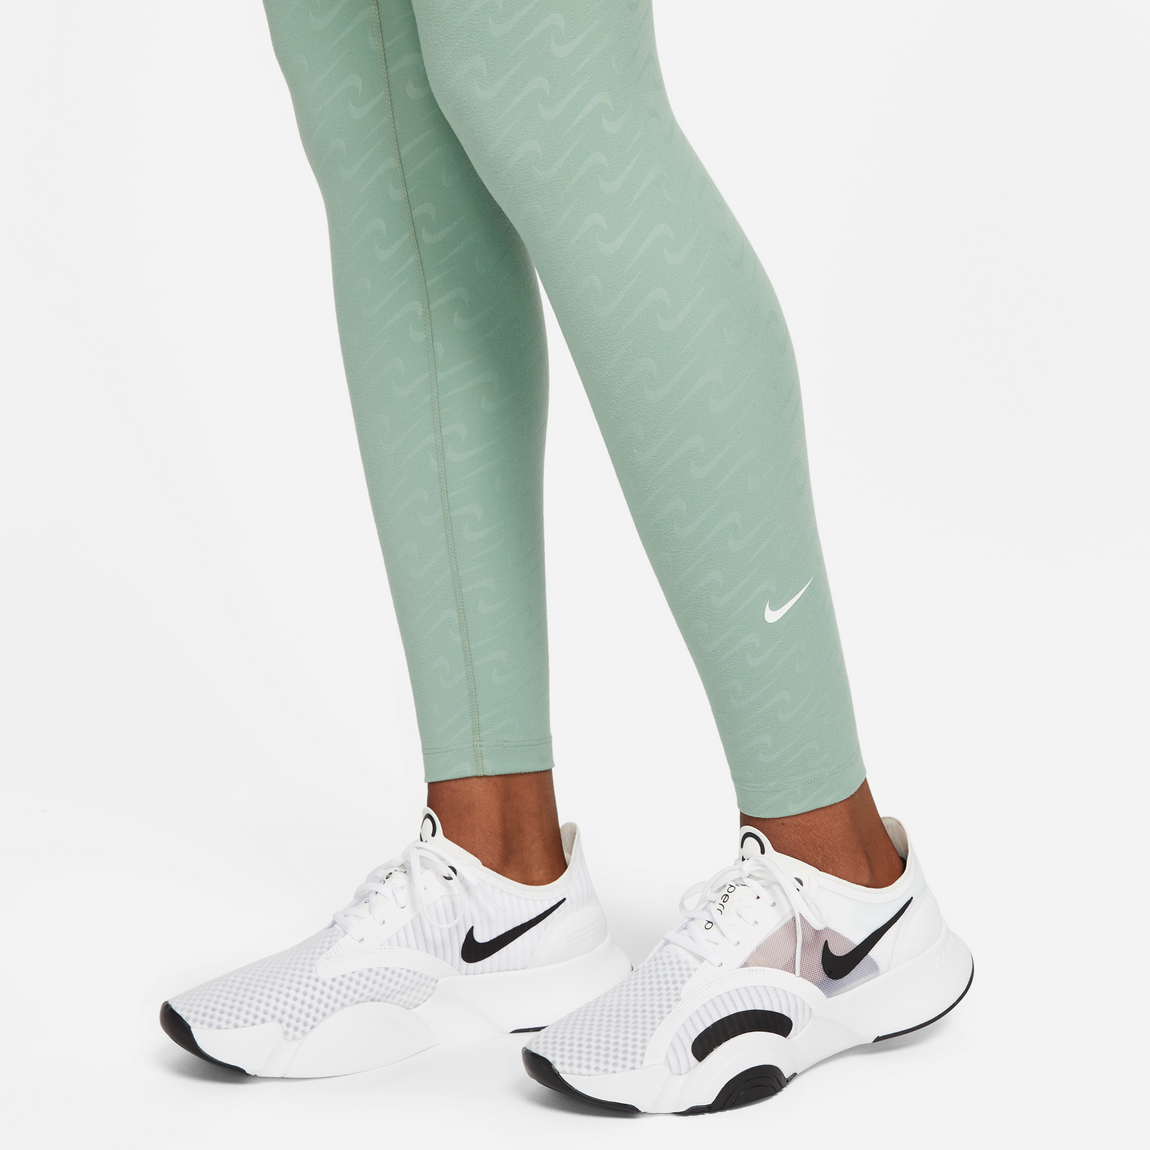 Nike Women's Dri-Fit One Clash Tights (Jade Smoke/Sail) - Nike Women's Dri-Fit One Clash Tights (Jade Smoke/Sail) - 